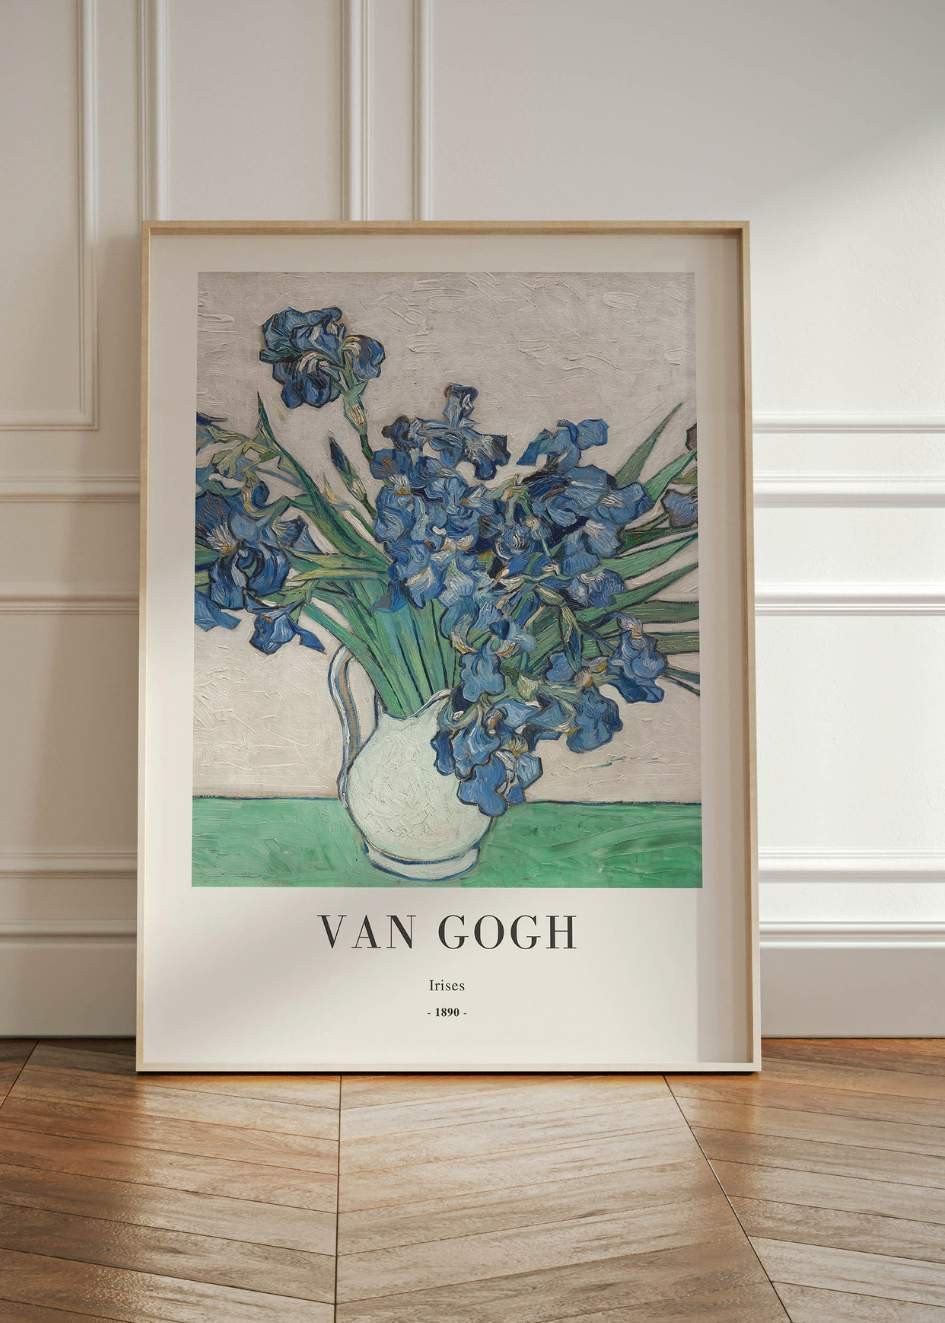 Van Gogh - Irises Poster